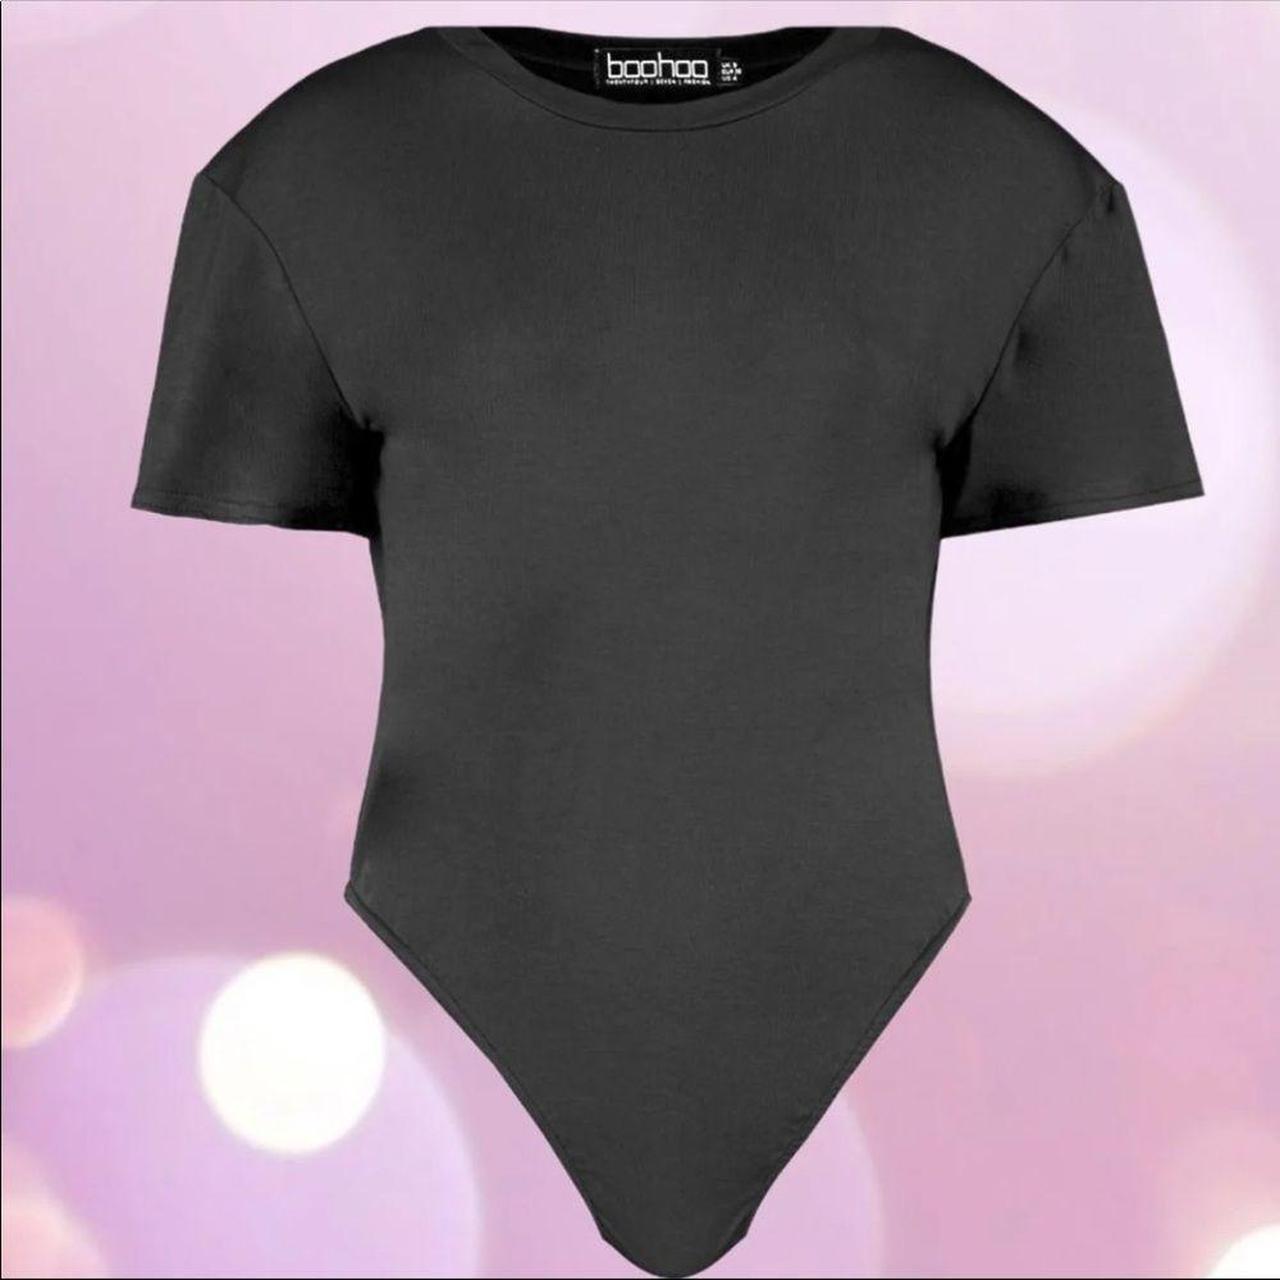 Product Image 1 - Black T-shirt bodysuit creating a